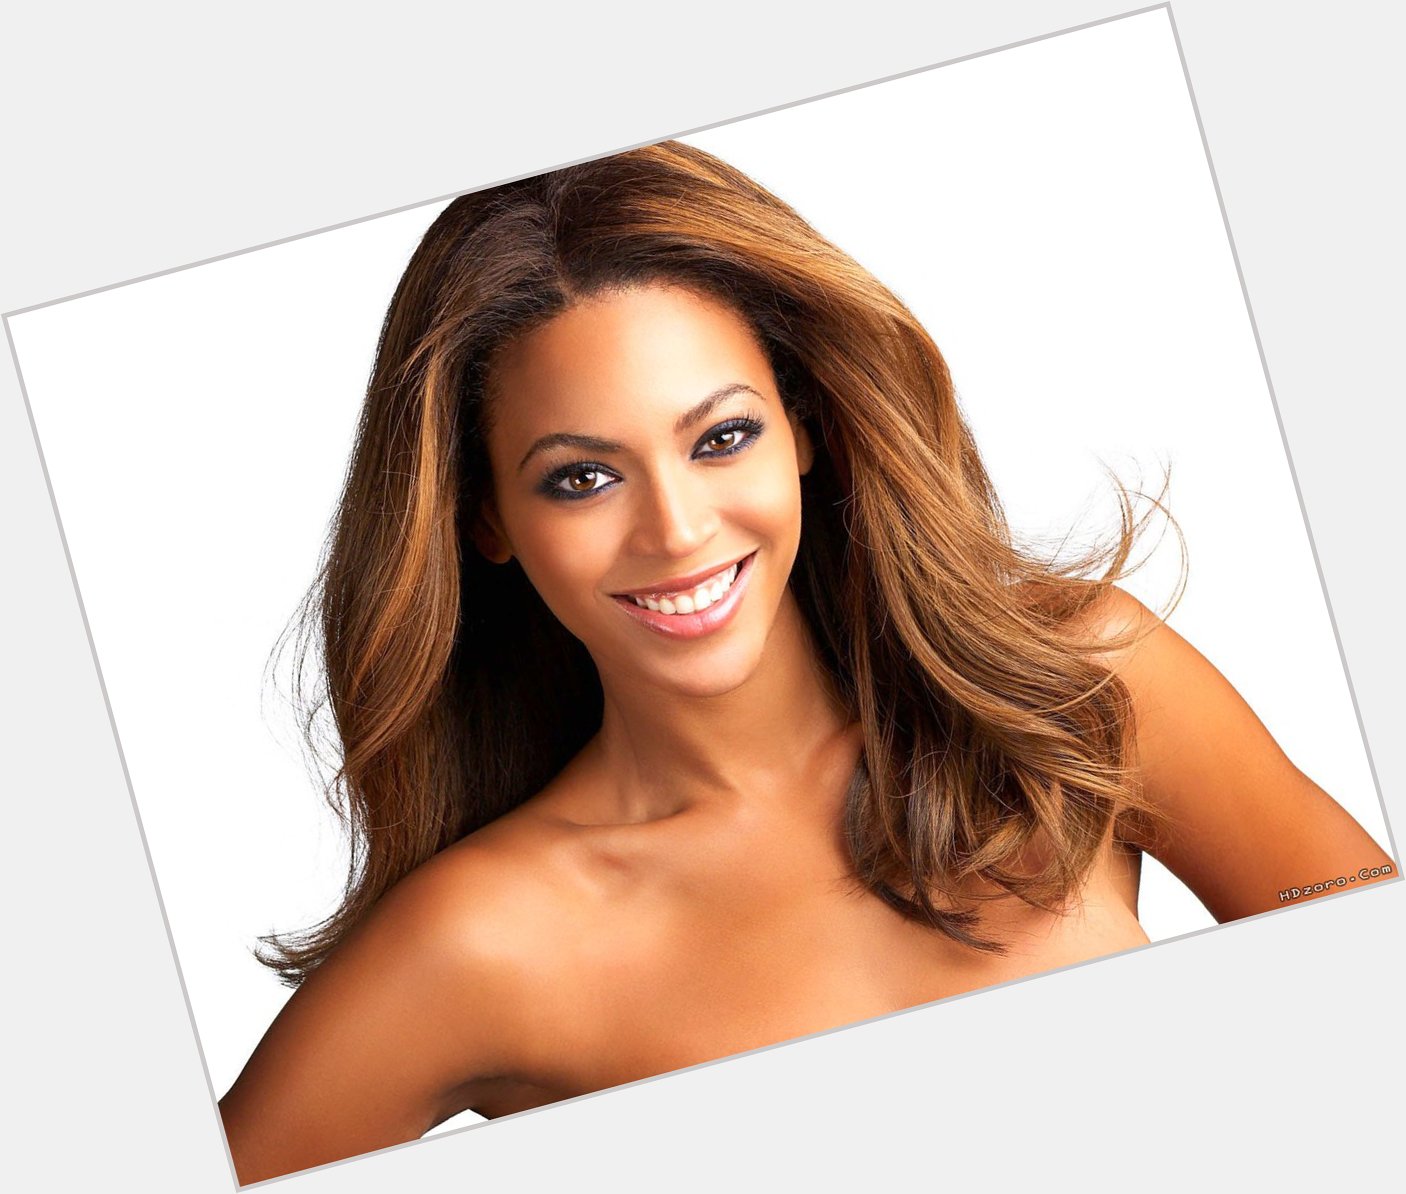 Happy Birthday Beyoncé Knowles!!! 